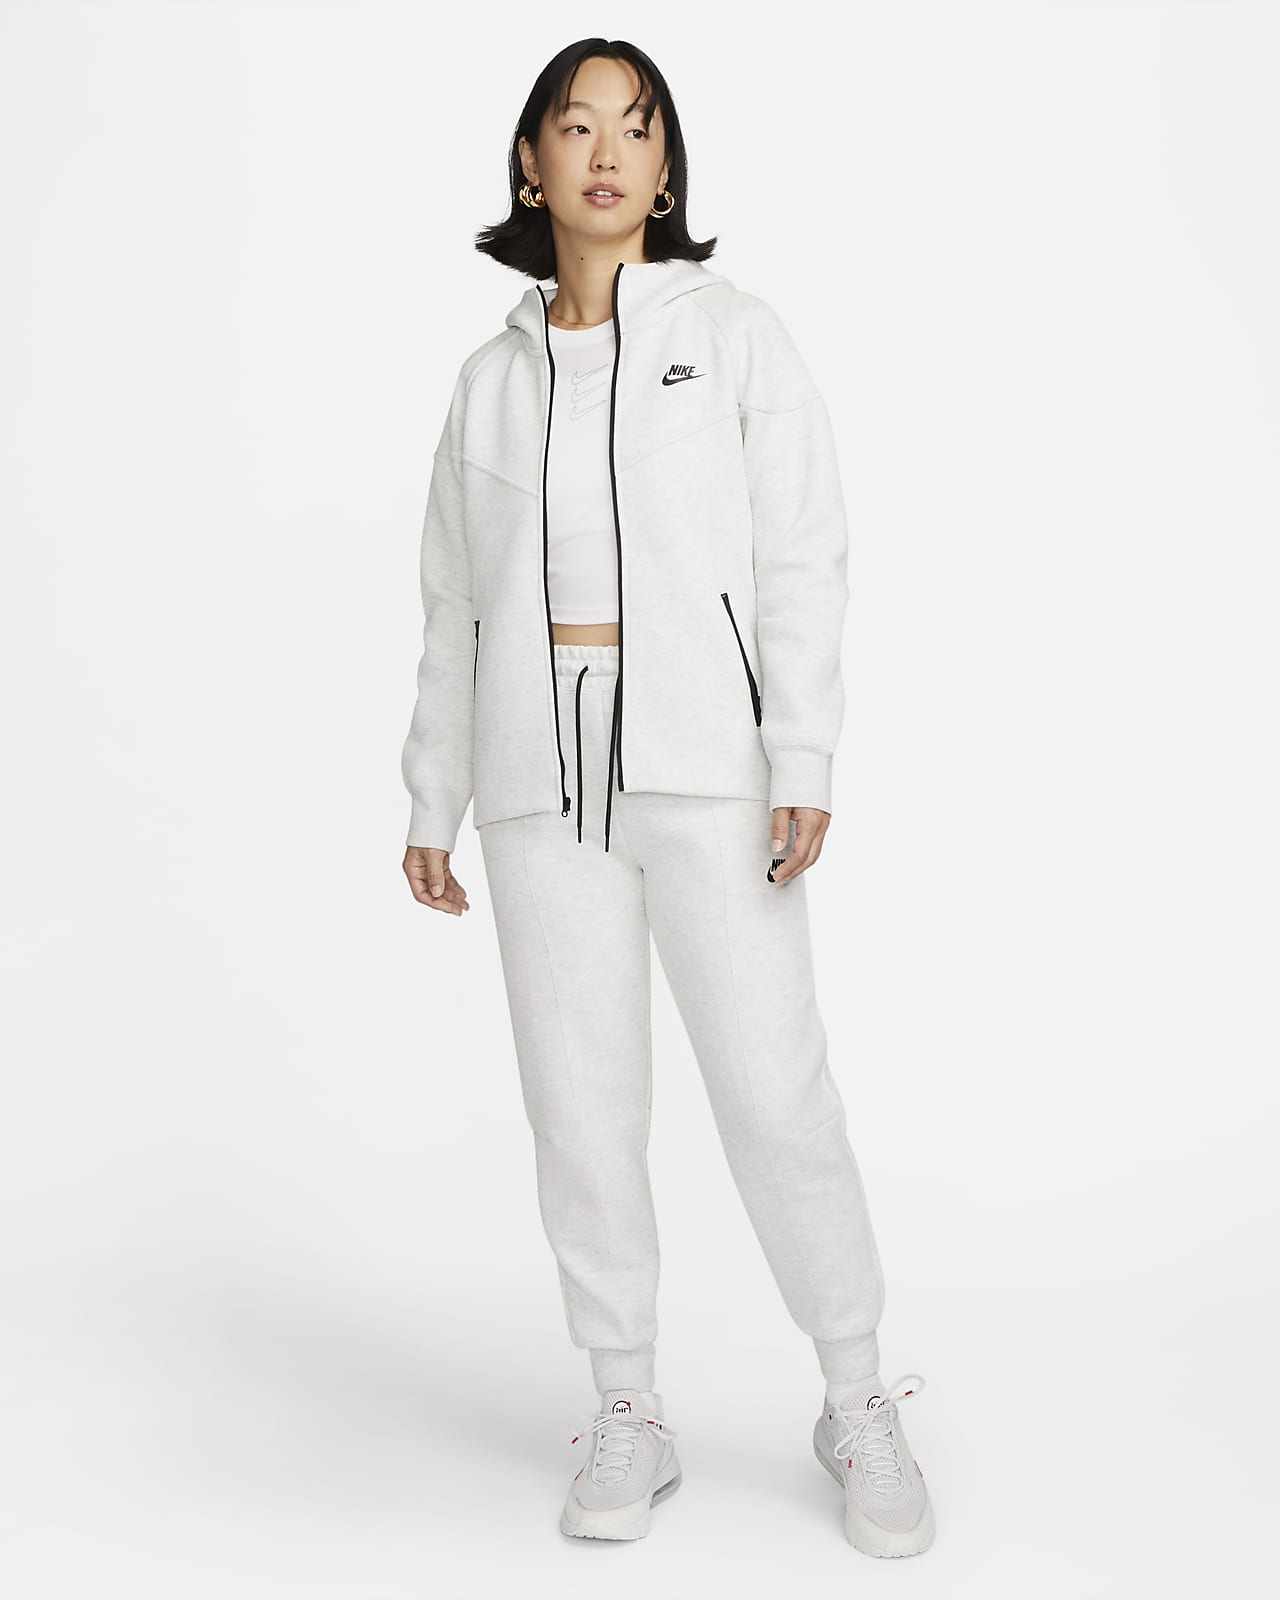 Nike Women's Tech Fleece Windrunner Full Zip Hoodie Black - US